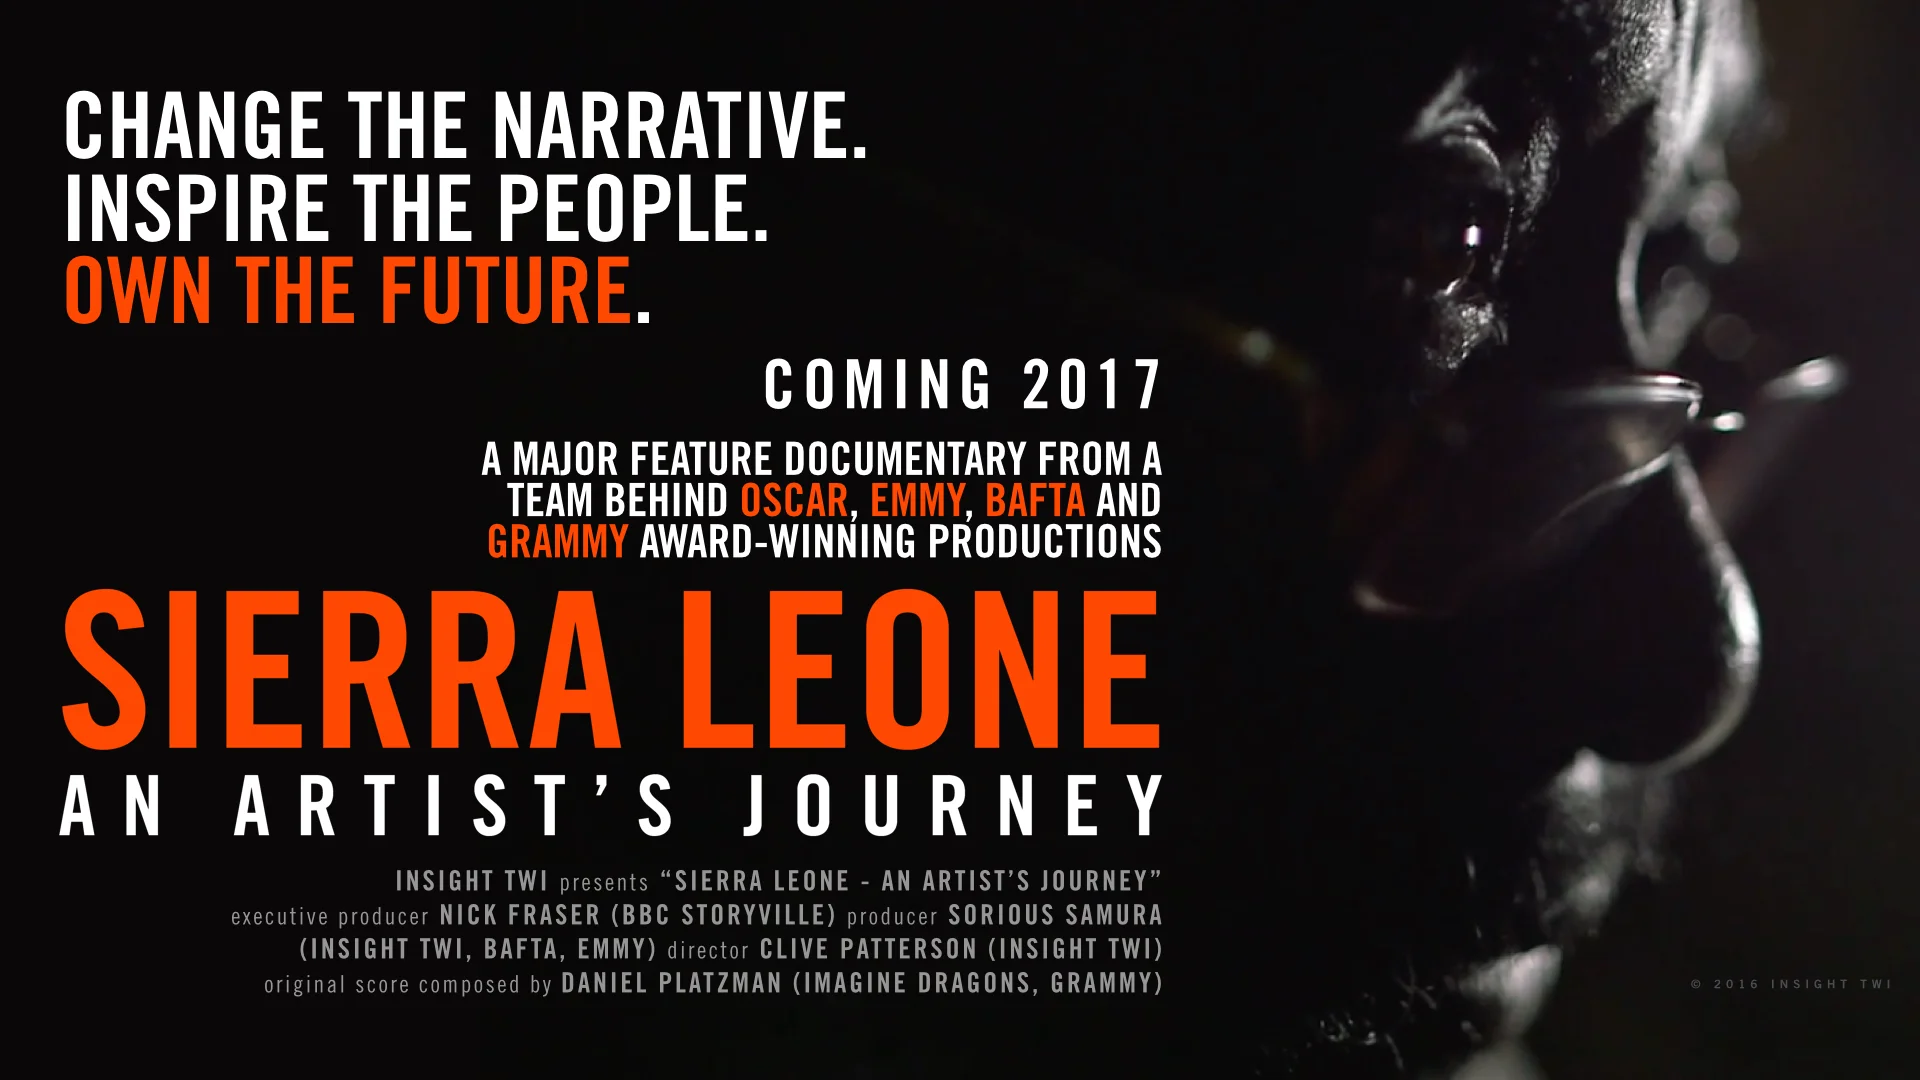 A journey through Sierra Leone